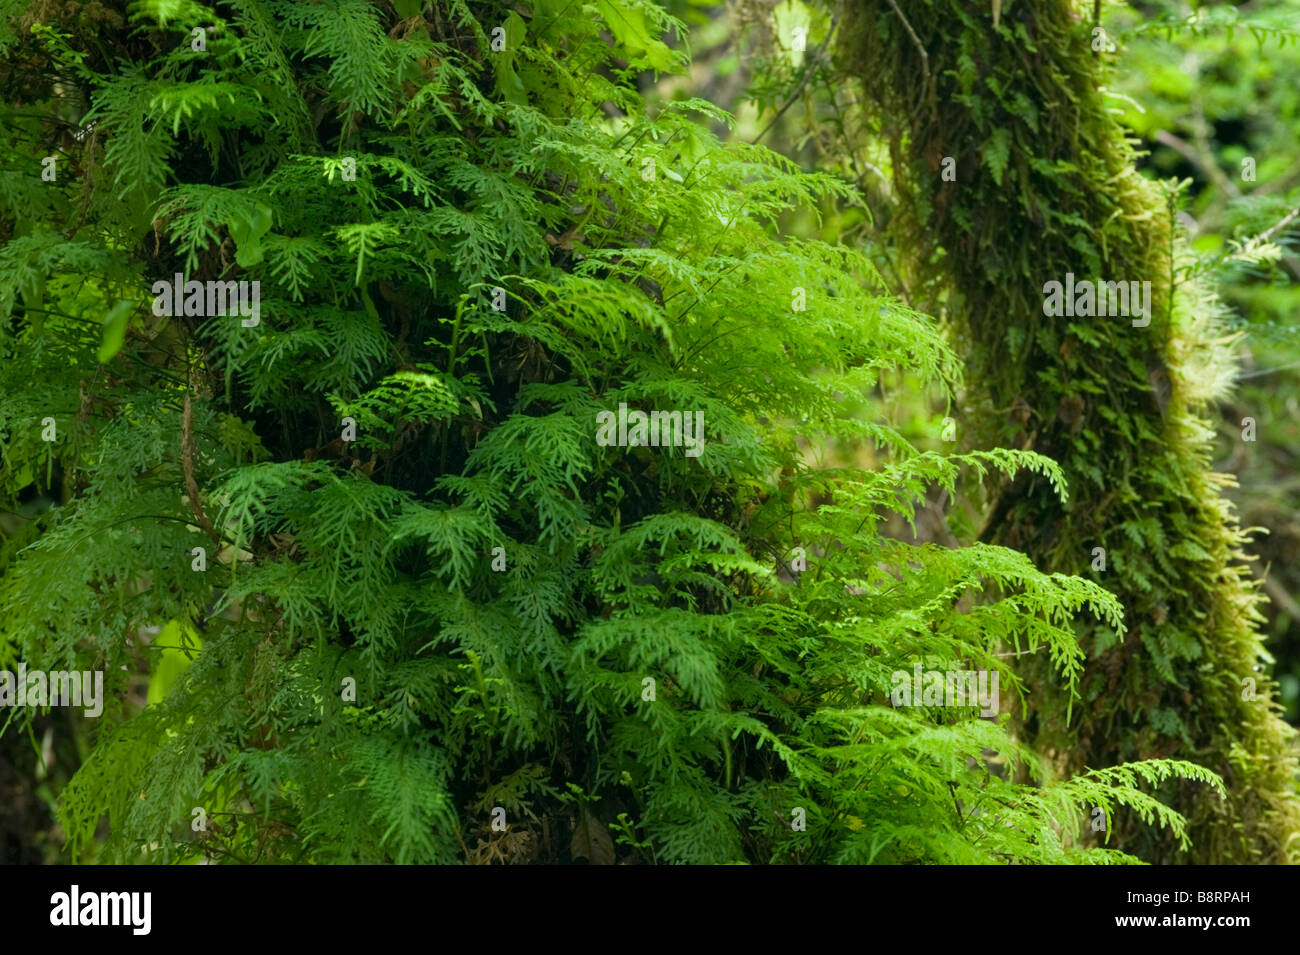 Moosbewachsenen Bäumen, gemäßigten Regenwald, Nationalpark Chiloé, Chiloé Insel, CHILE Stockfoto